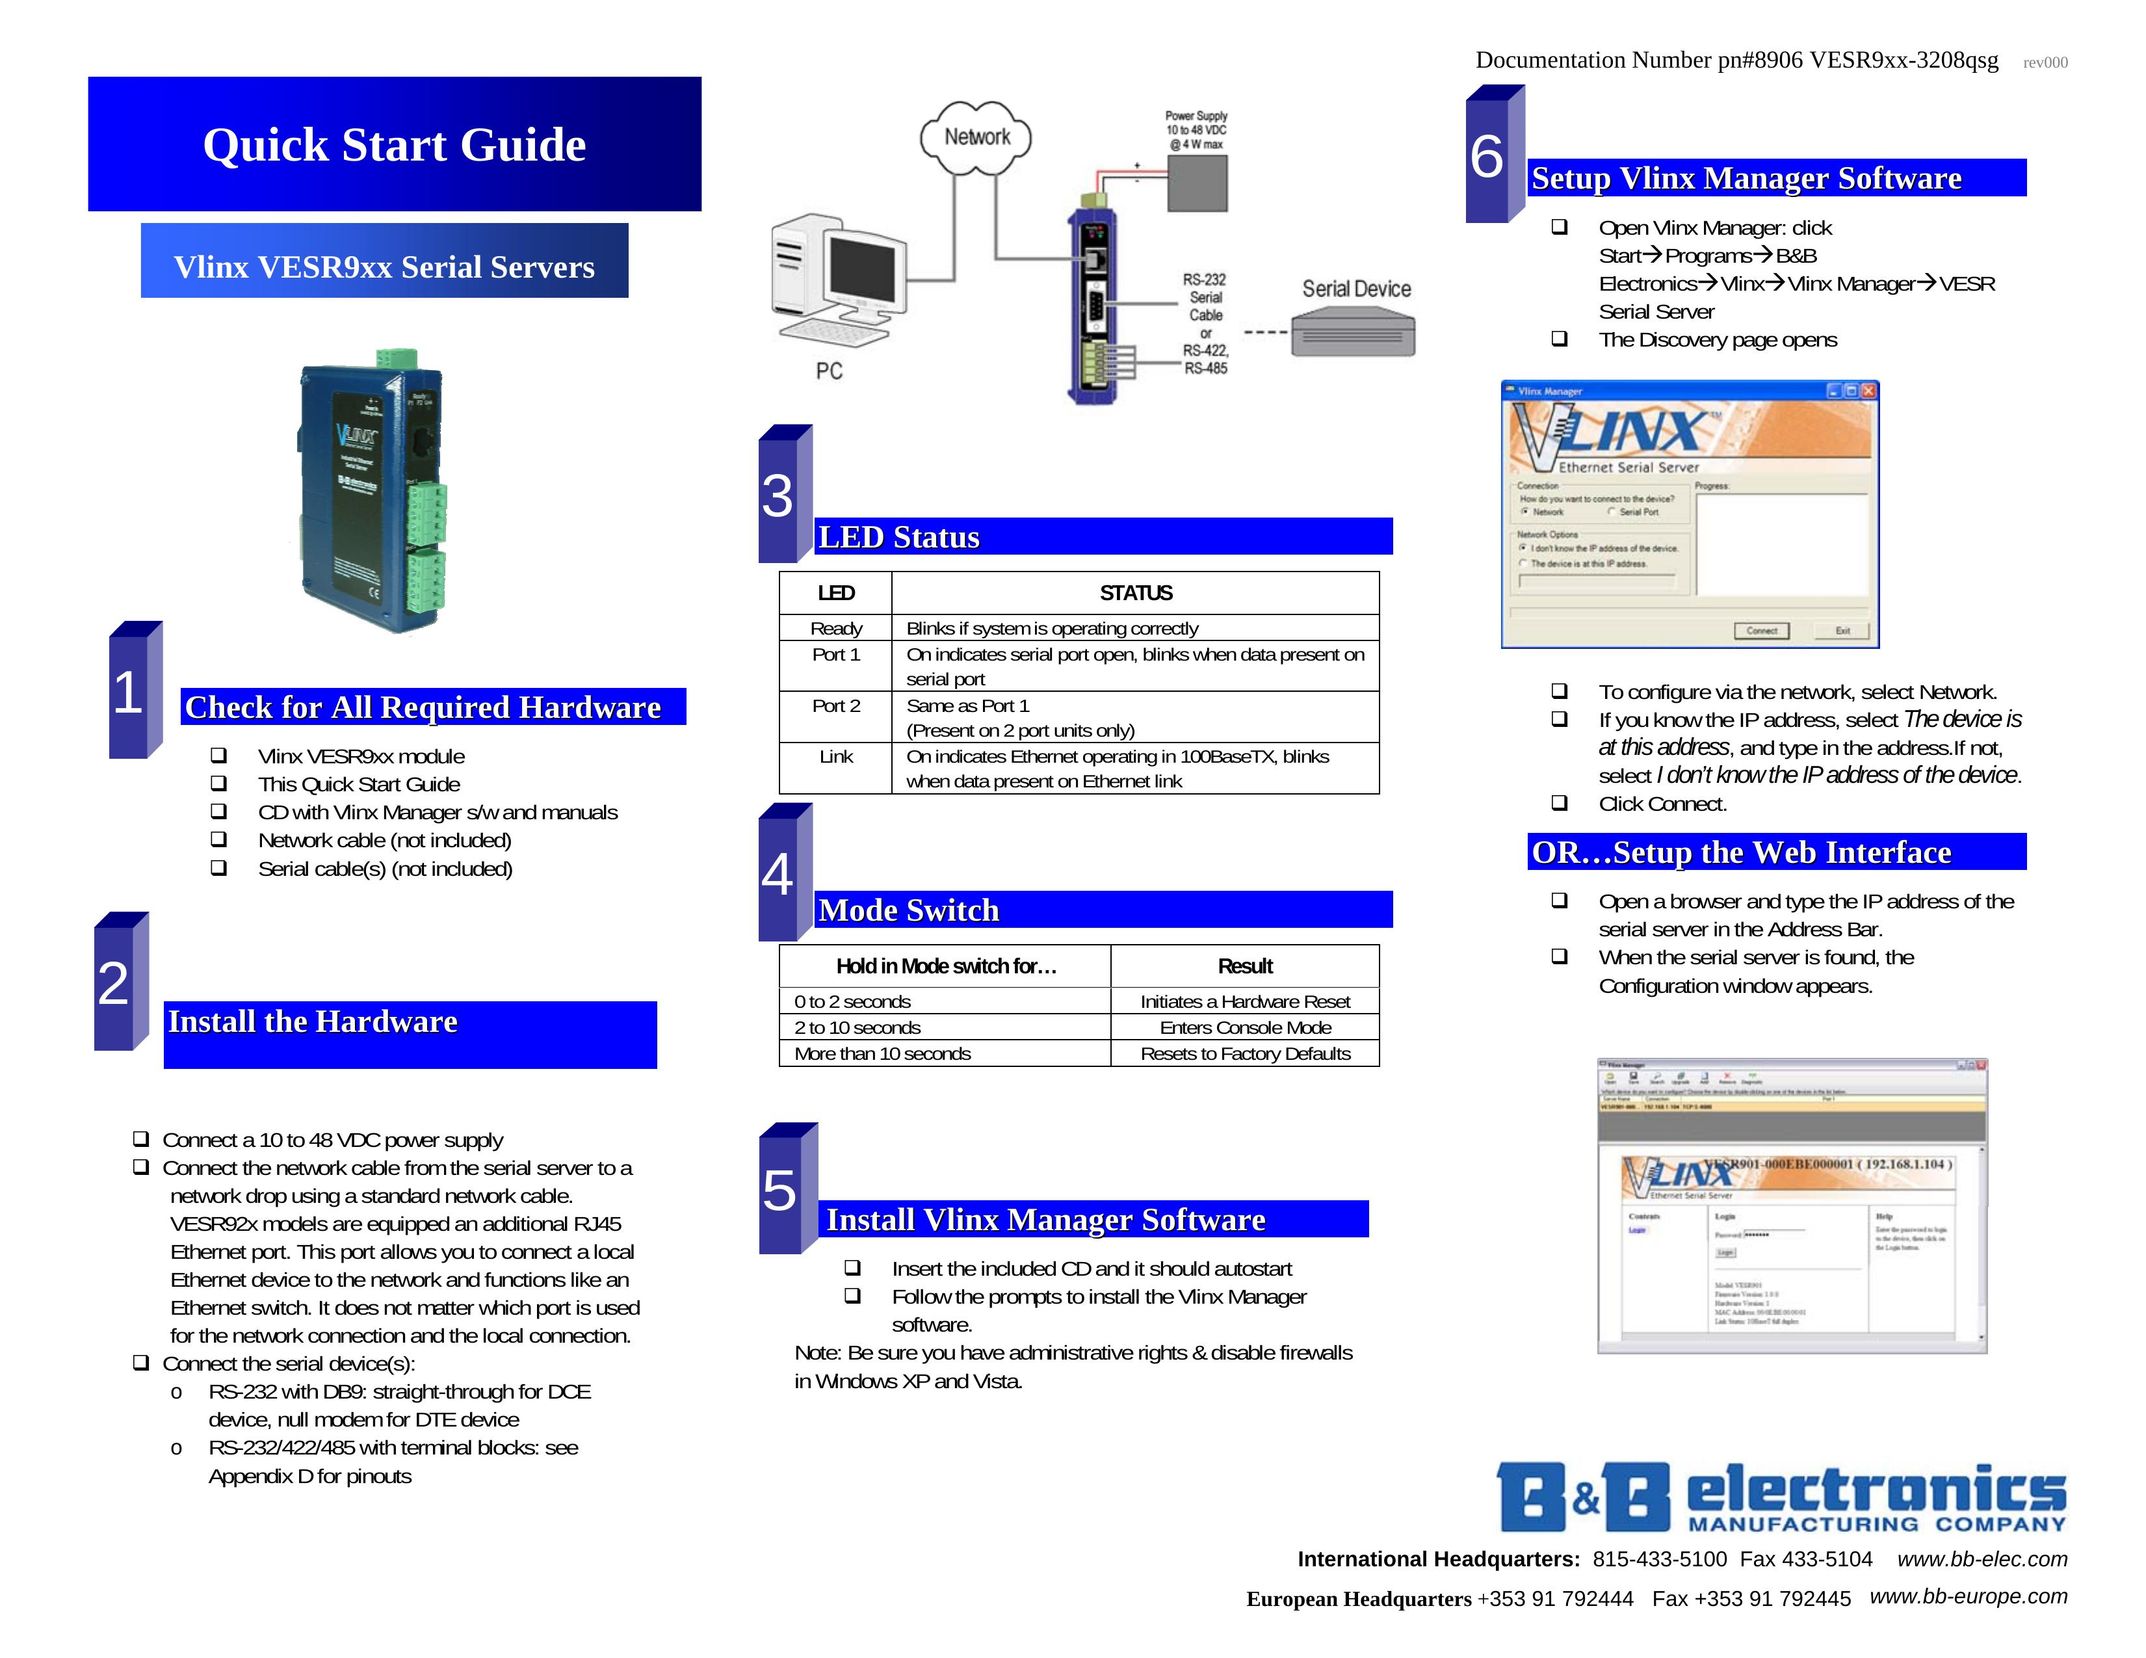 B&B Electronics Vlinx VESR9xx Home Theater Server User Manual